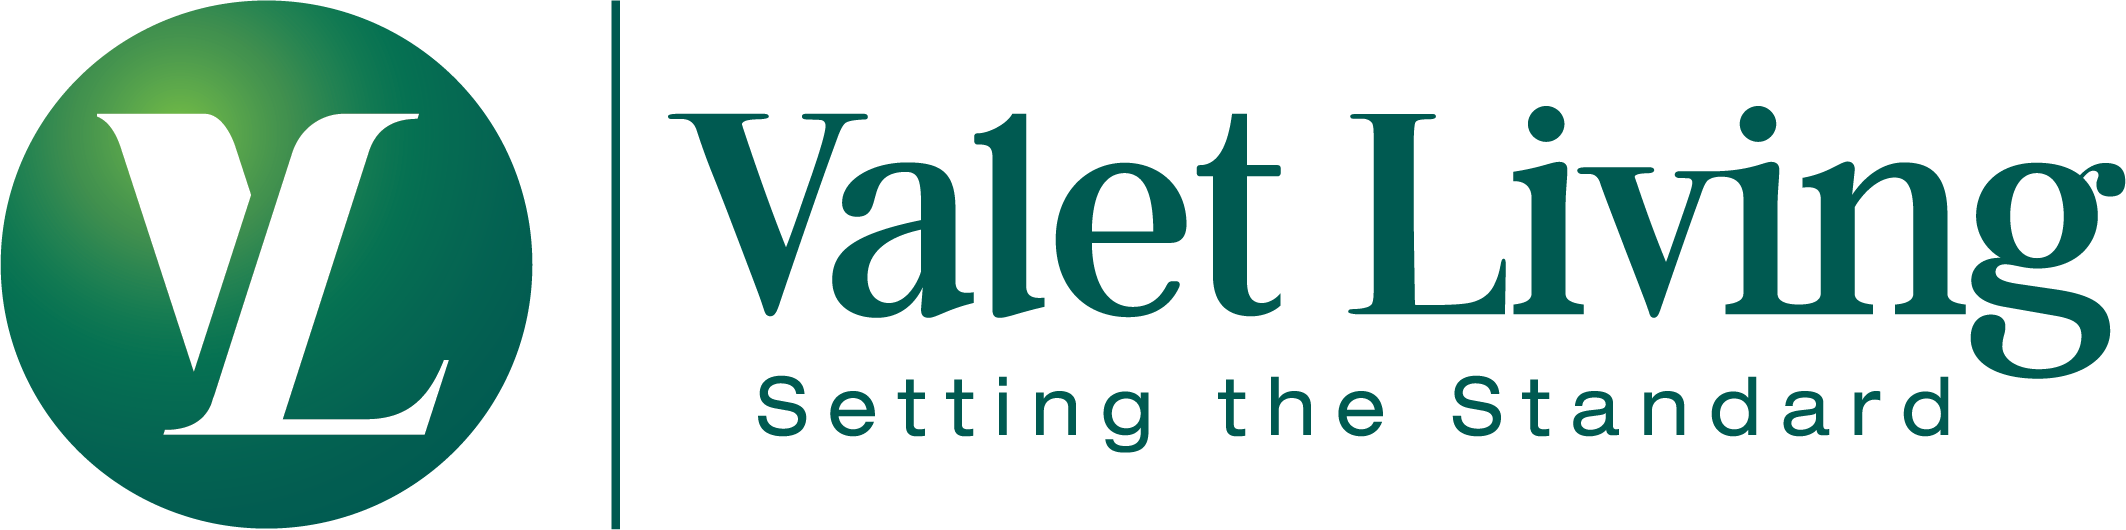 Valet Living Disrupt